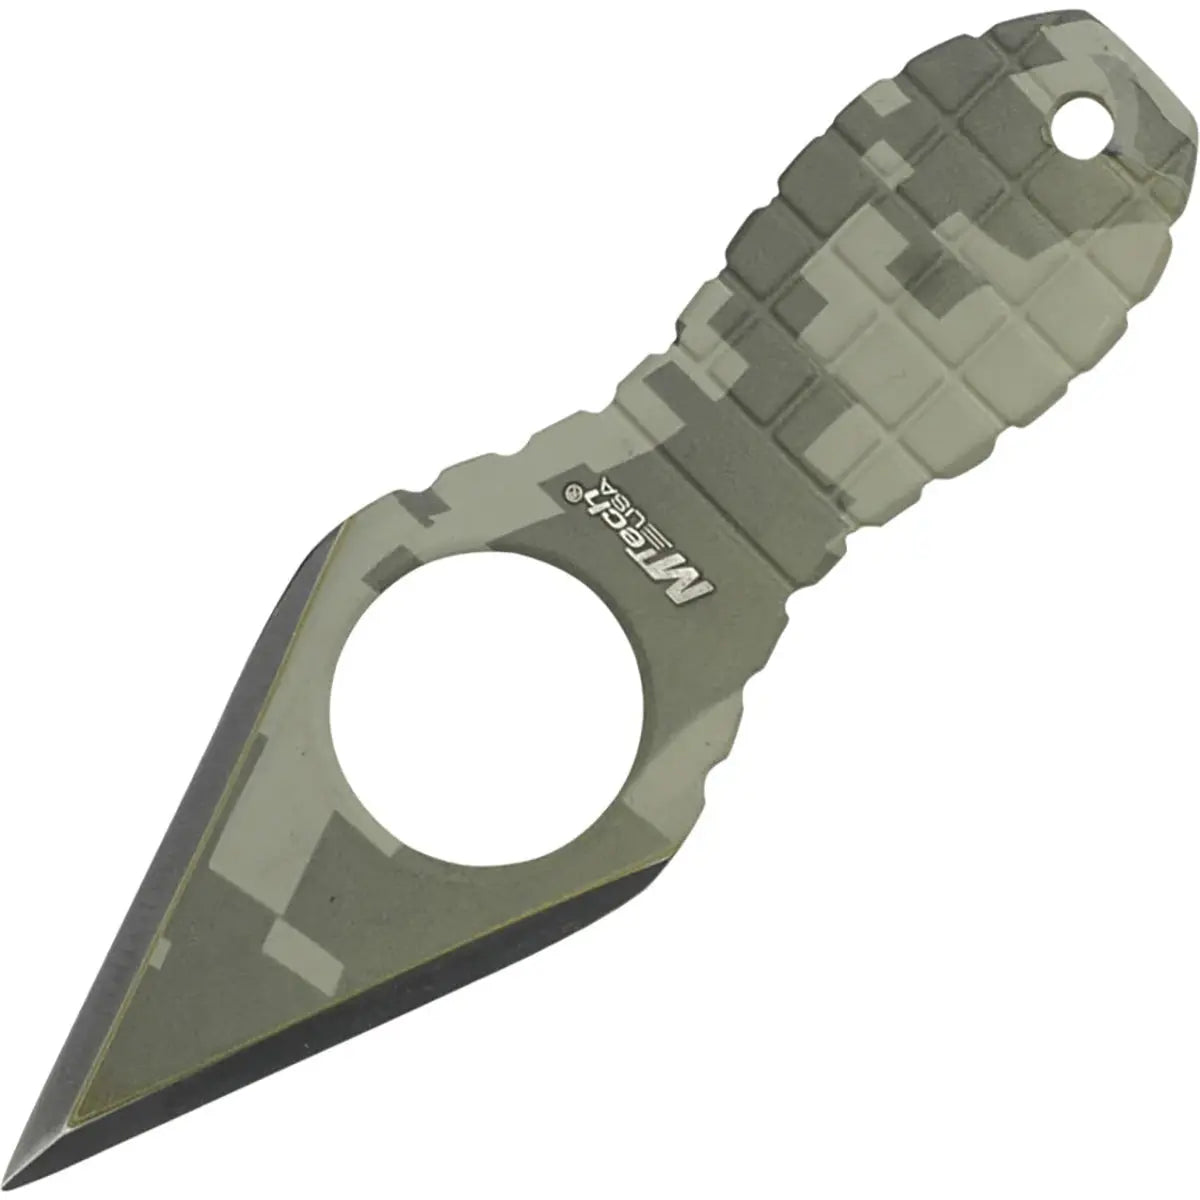 MTech USA Tactical Fixed Blade Grenade Neck Knife, 4.25" Overall, Camo, MT-588DG MTech USA